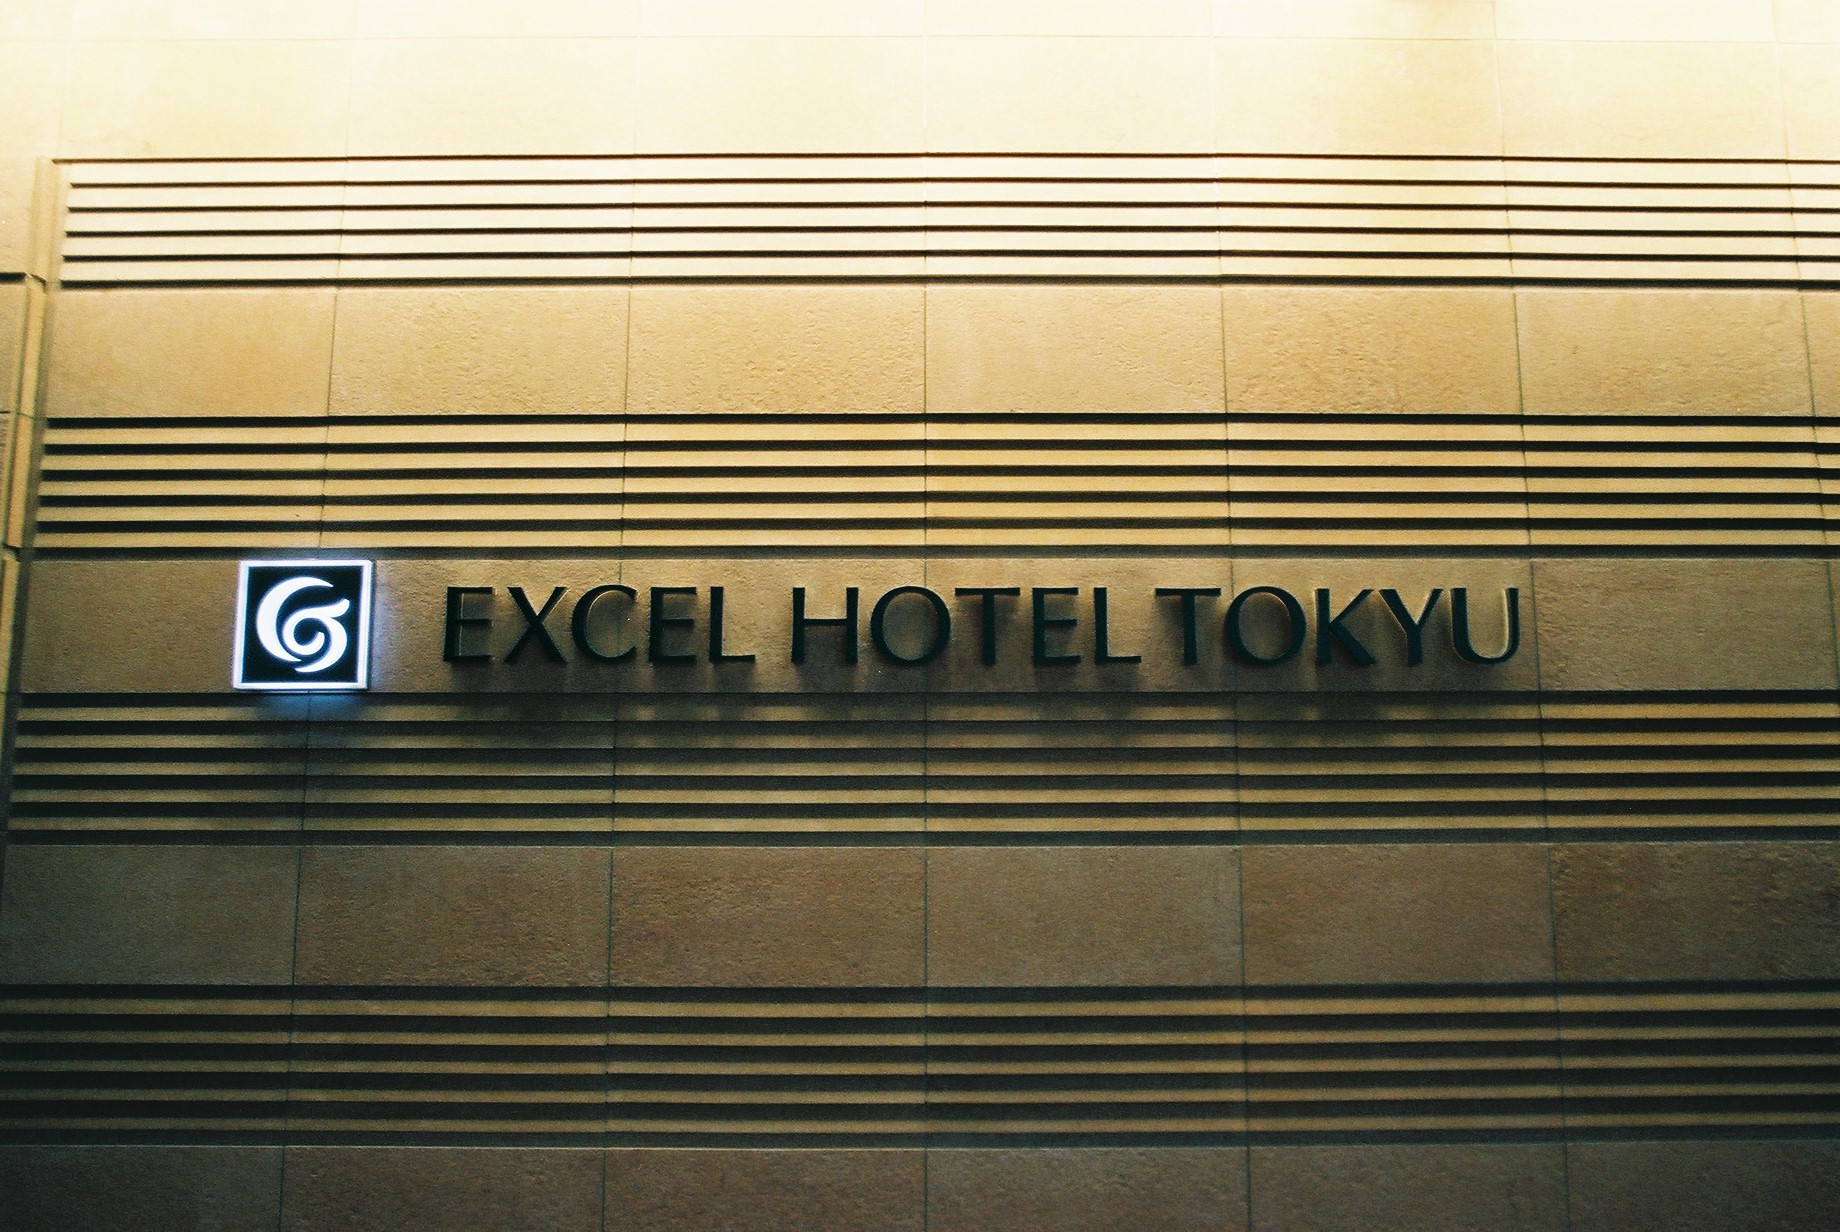 HANEDA EXCEL HOTEL TOKYU